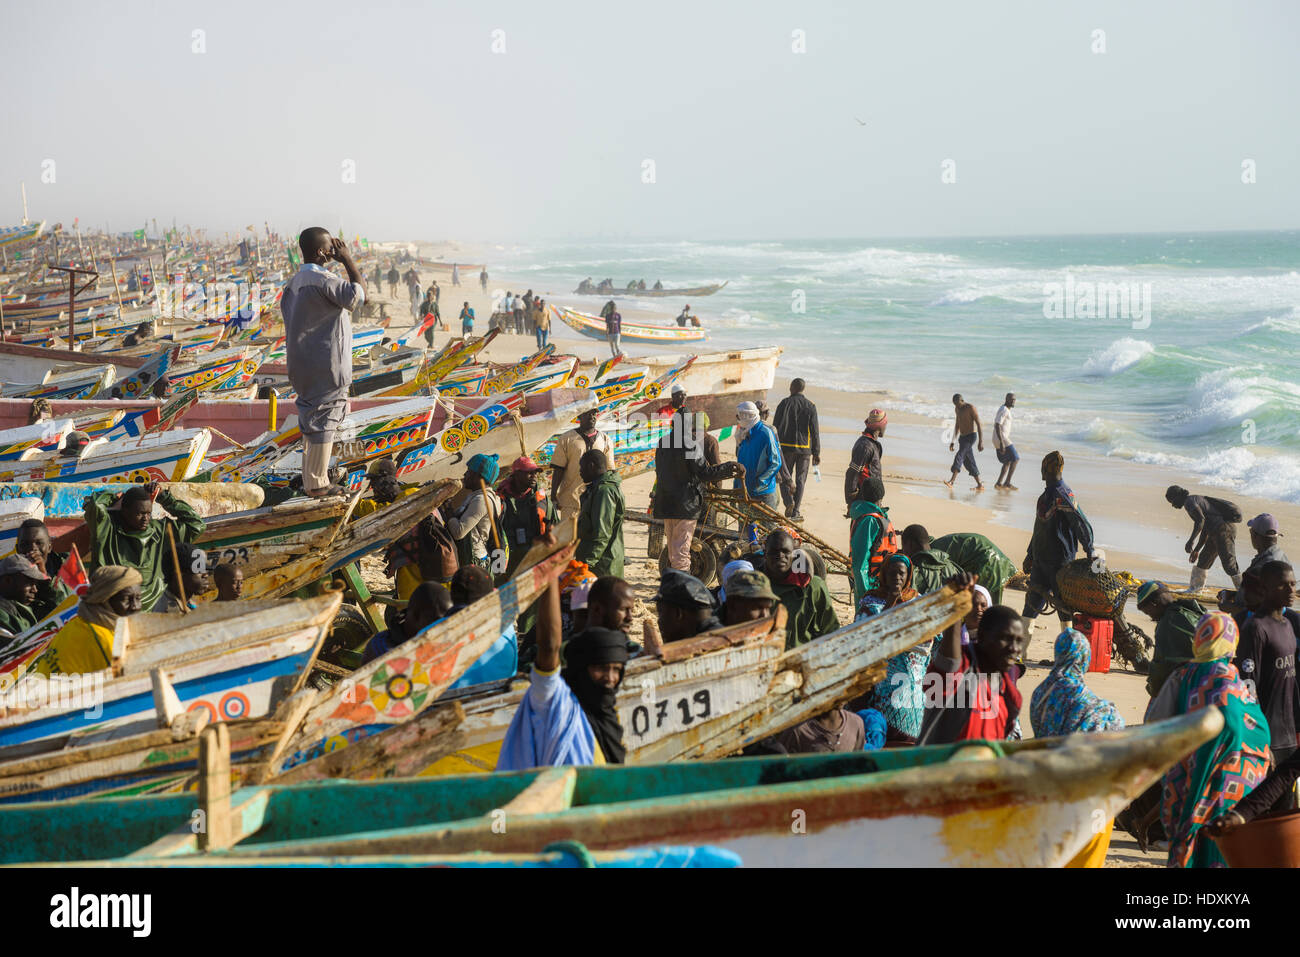 FIshermen, peddlers, boats in Nouakchott's famous fish market Stock Photo